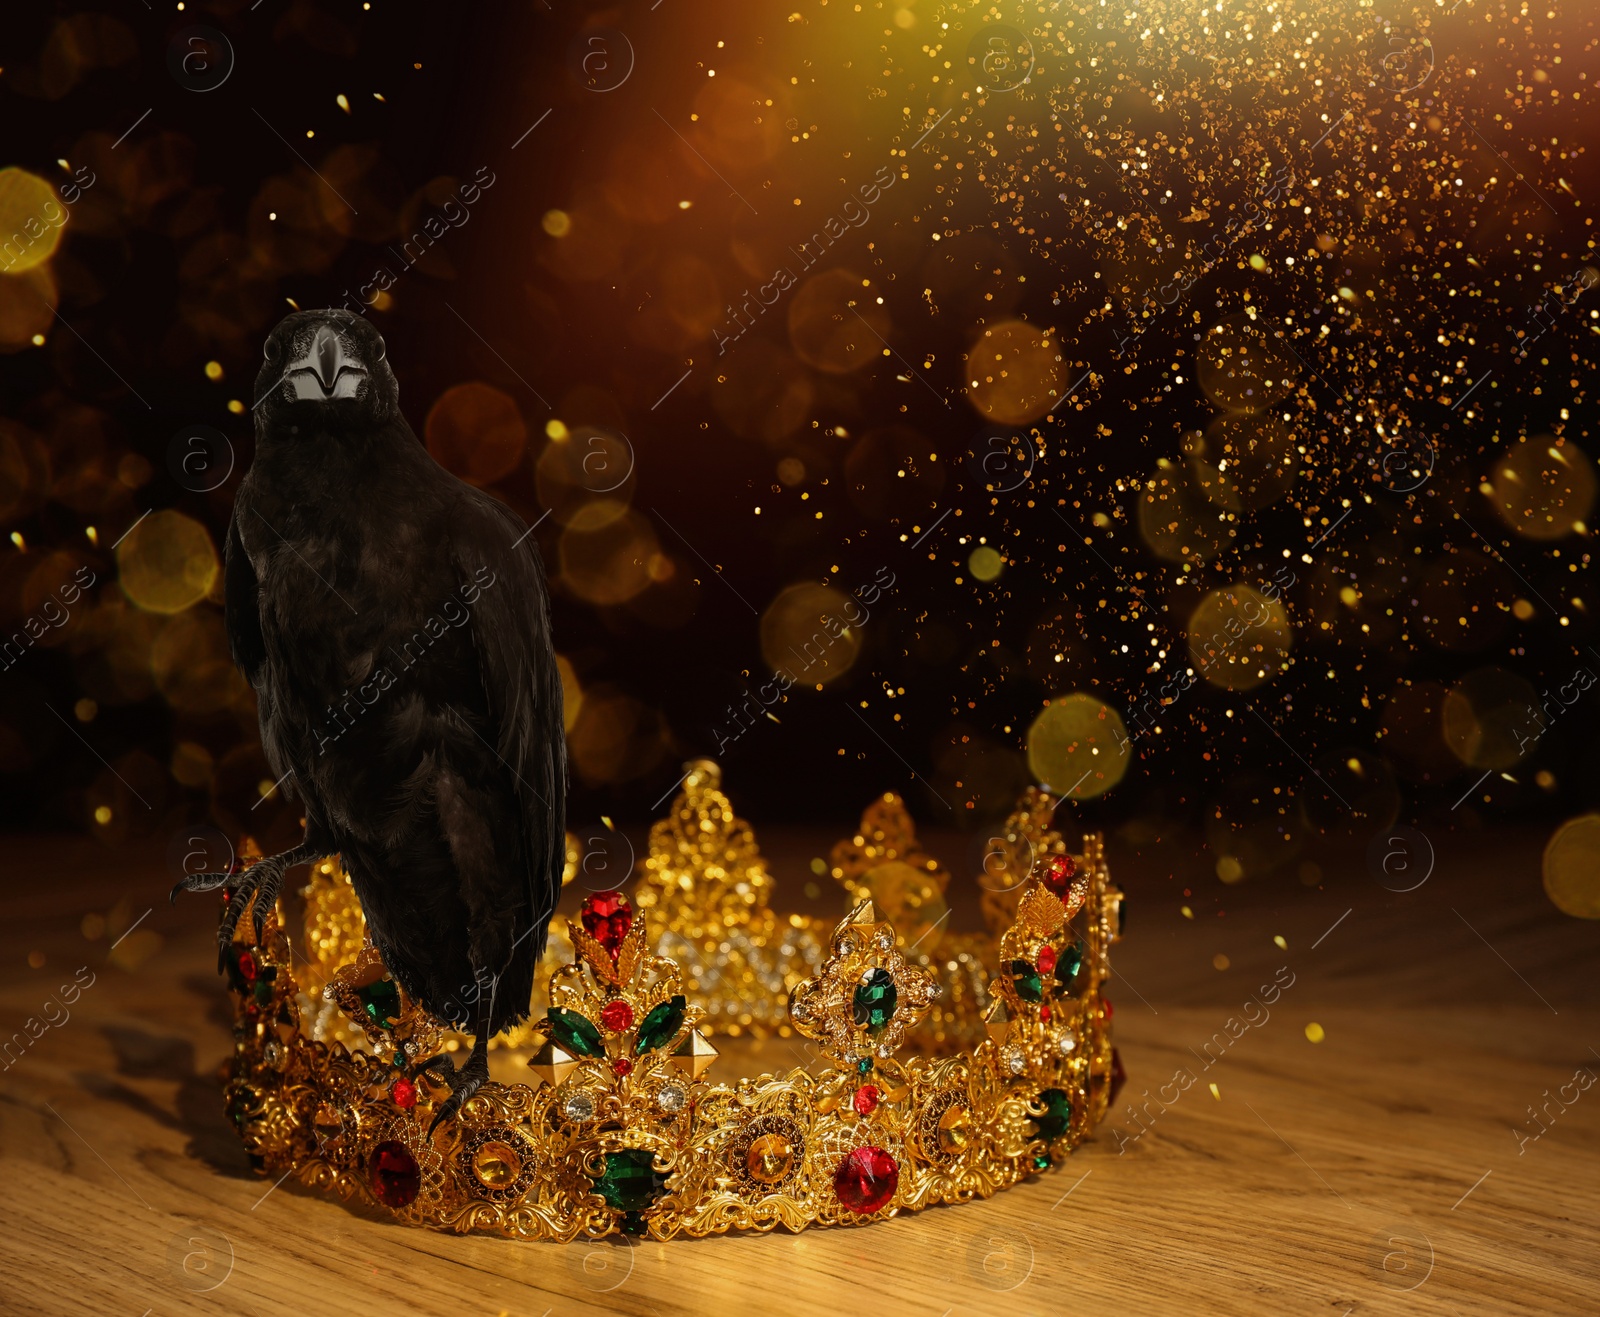 Image of Fantasy world. Black crow lit by magic light sitting on golden crown, bokeh effect